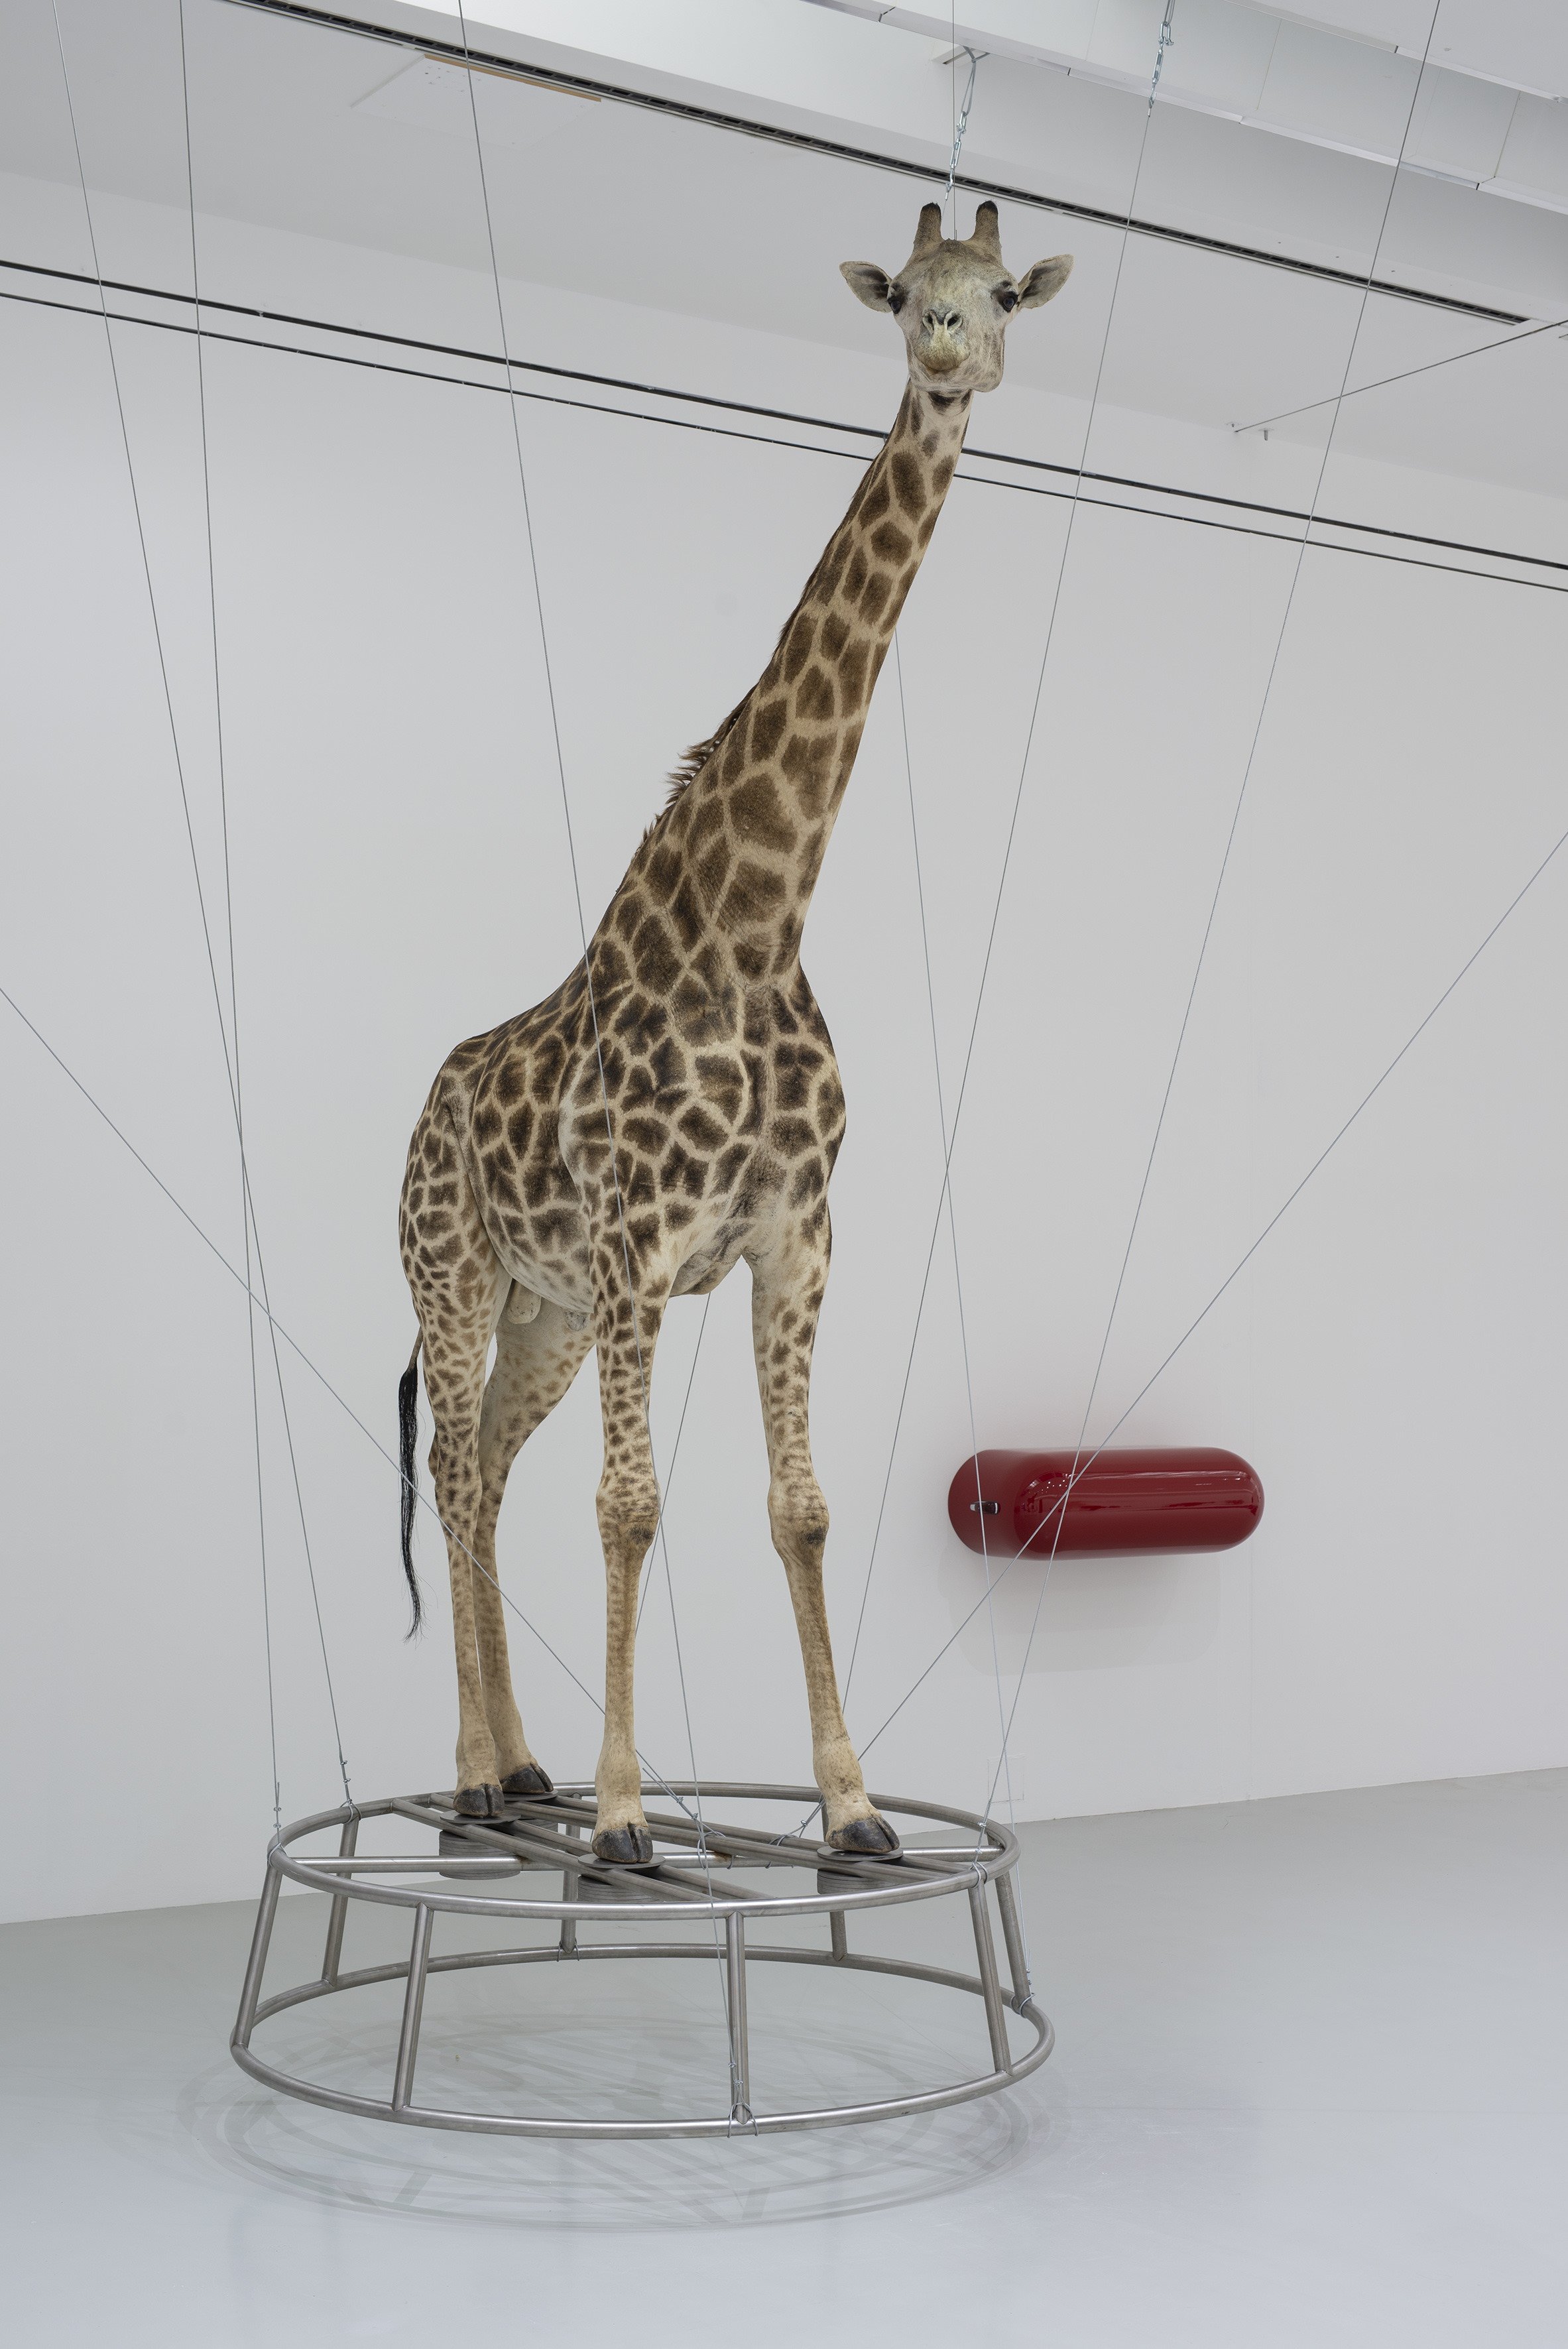 Christiane MoÌˆbus, KuÌˆsse vom KoÌˆnig (Eng. Kisses from the King), 2001/2007, taxidermied giraffe, metal pedestal, wire ropes, 580 x 315 x 250 cm; Â© Christiane MoÌˆbus/VG Bild-Kunst, Bonn 2022, Photo: Herling/Herling/Werner, Sprengel Museum Hanover